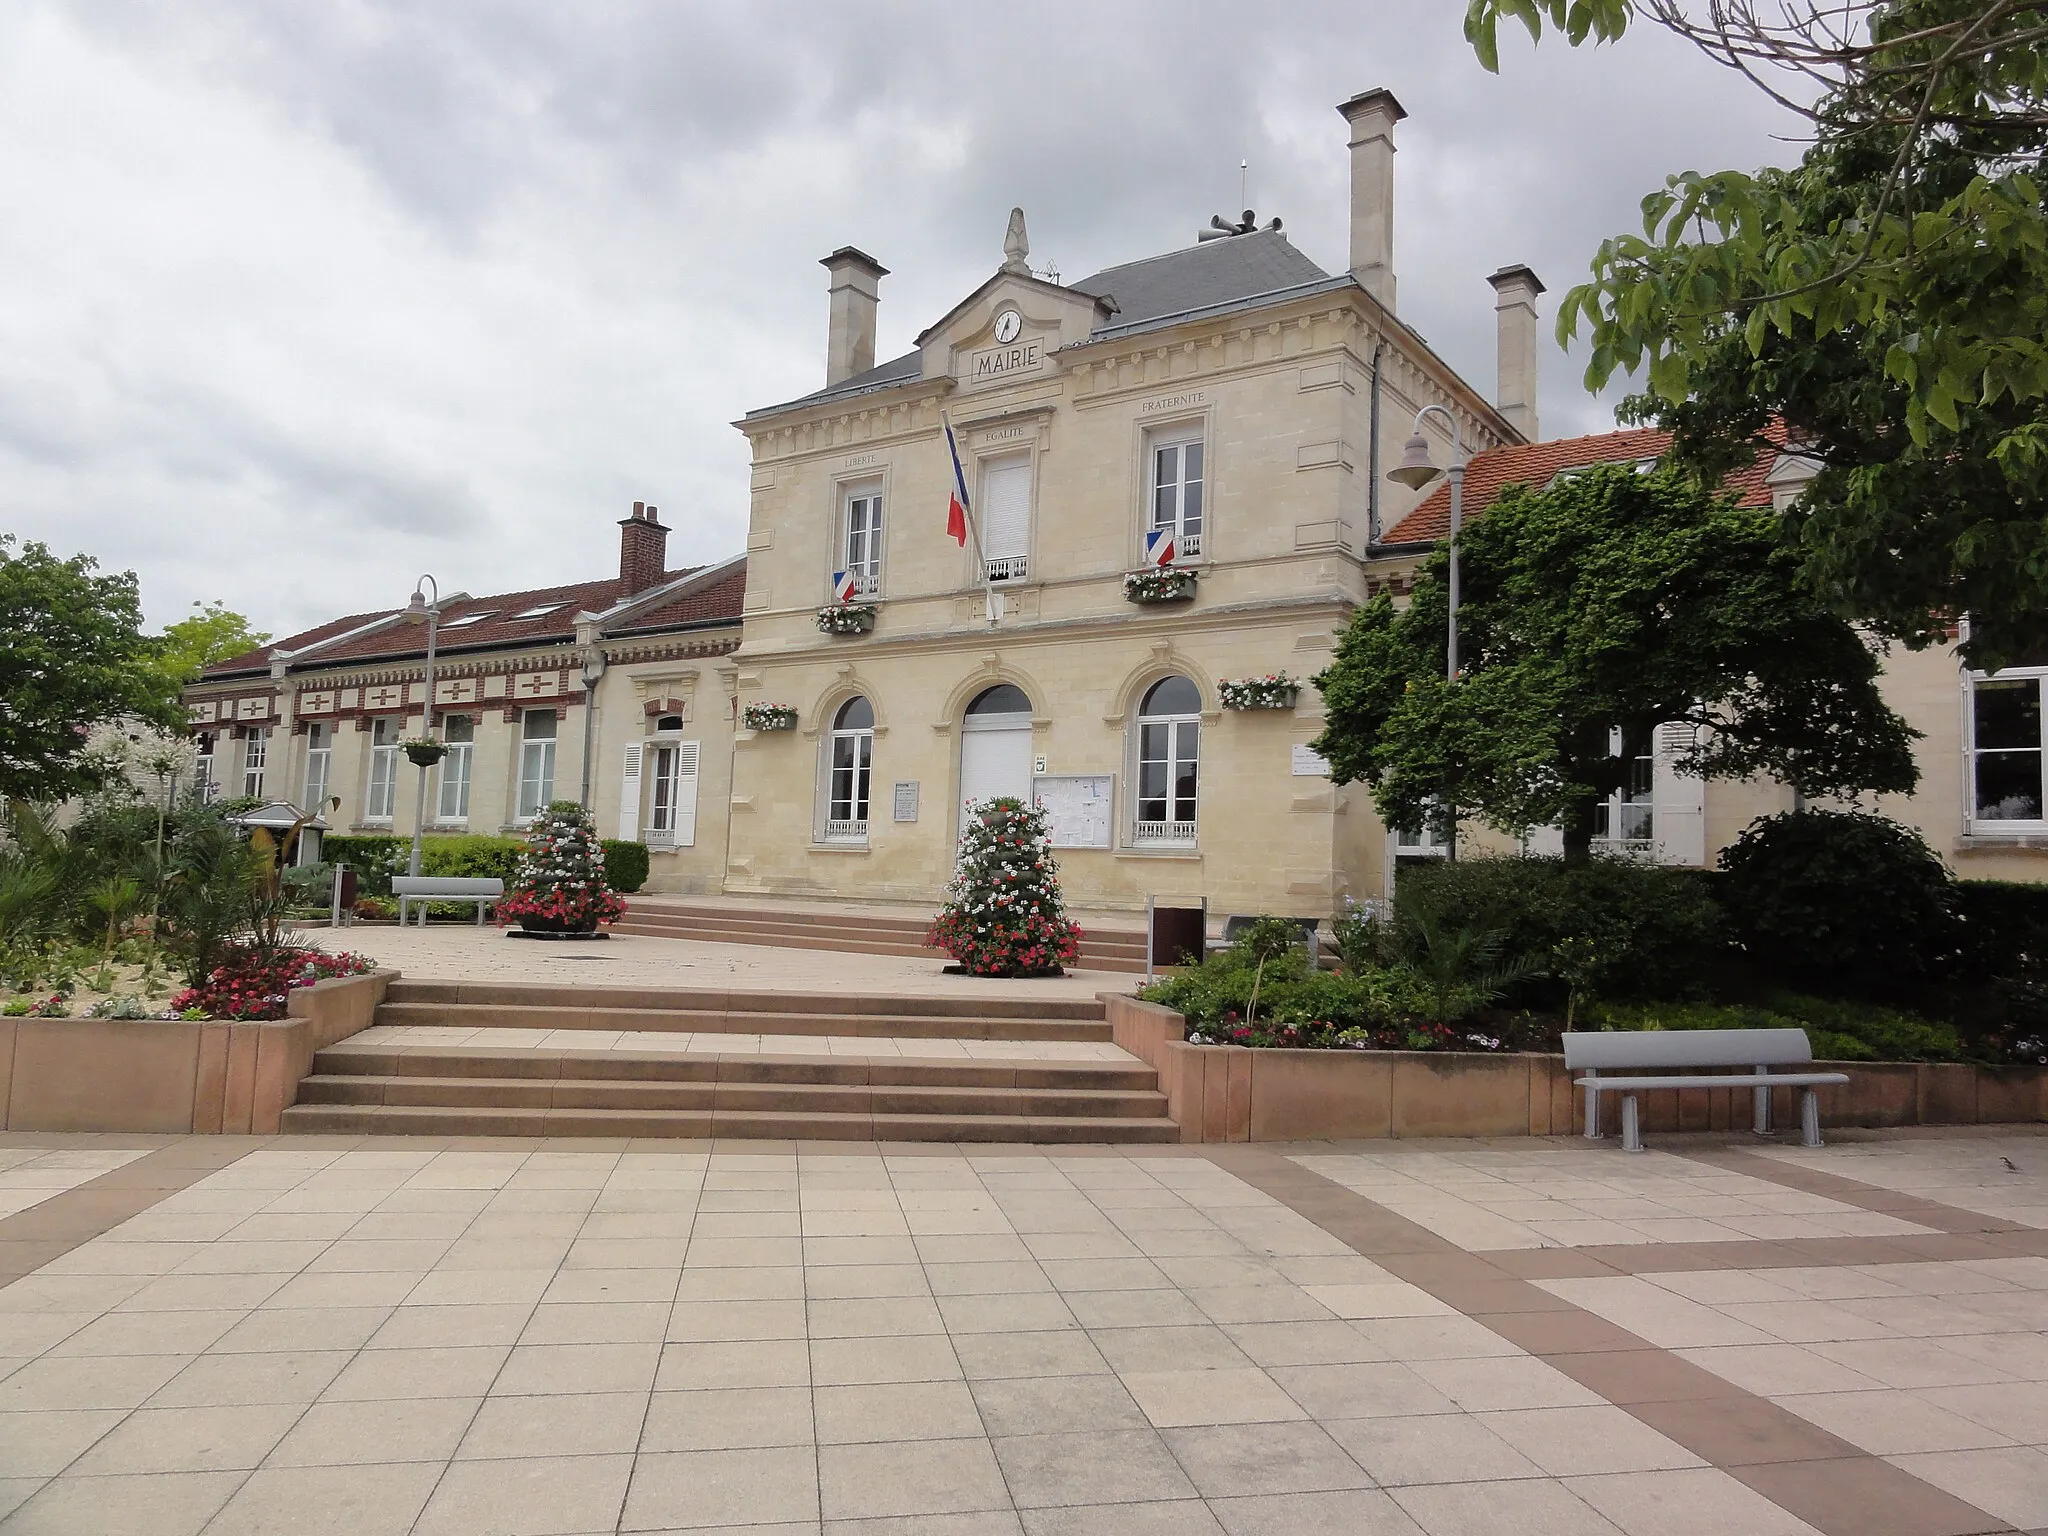 Image of Villers-Saint-Paul